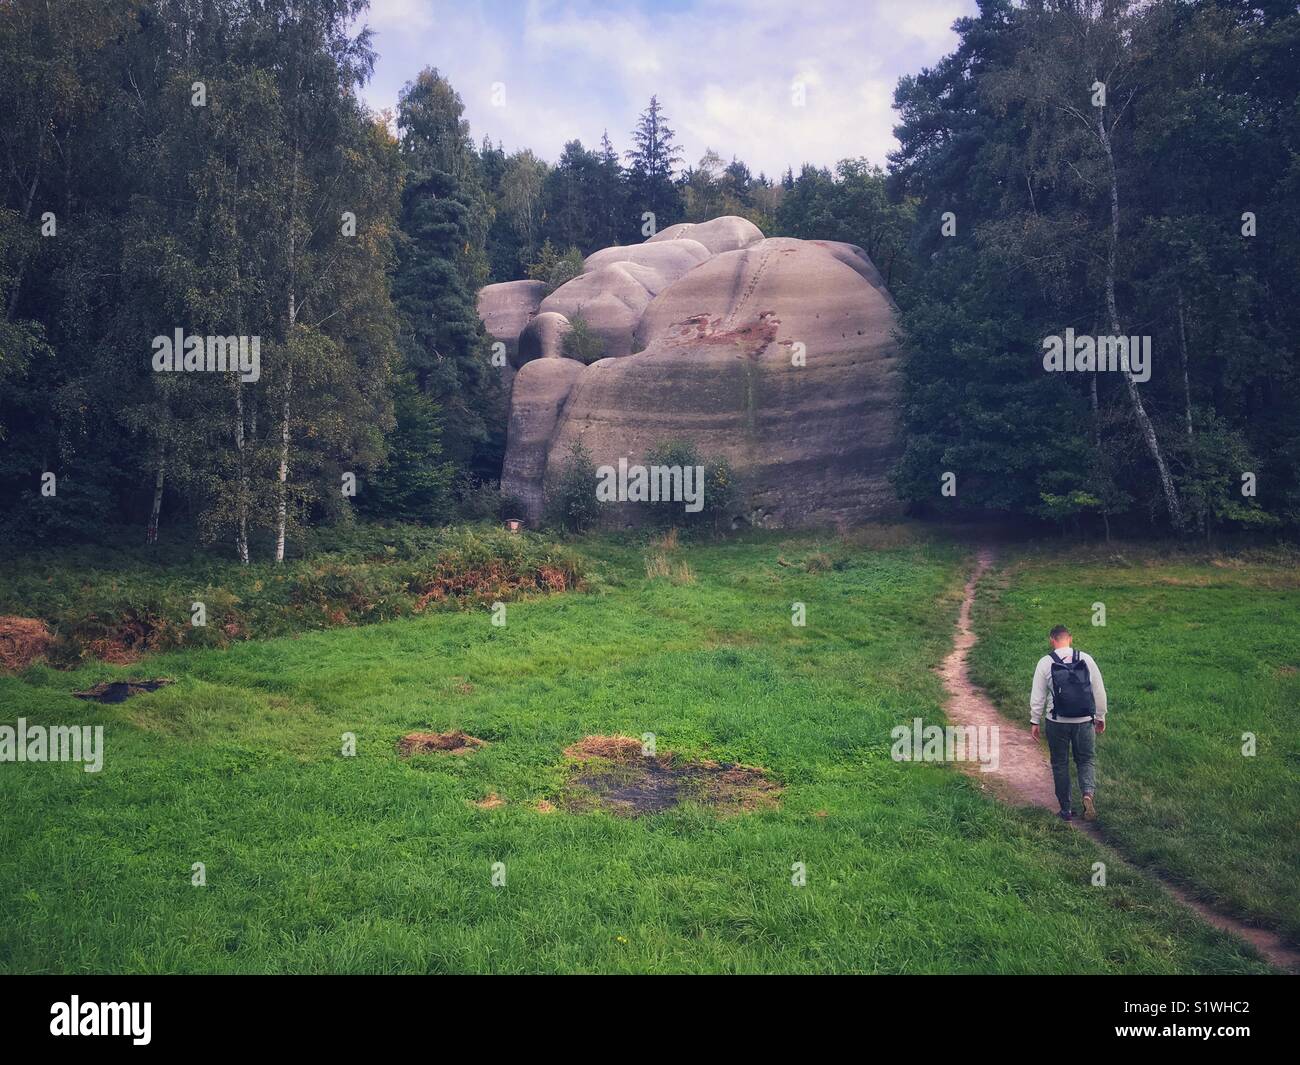 Bile Kameny (White Stones) rock formation in Czech Republic Stock Photo